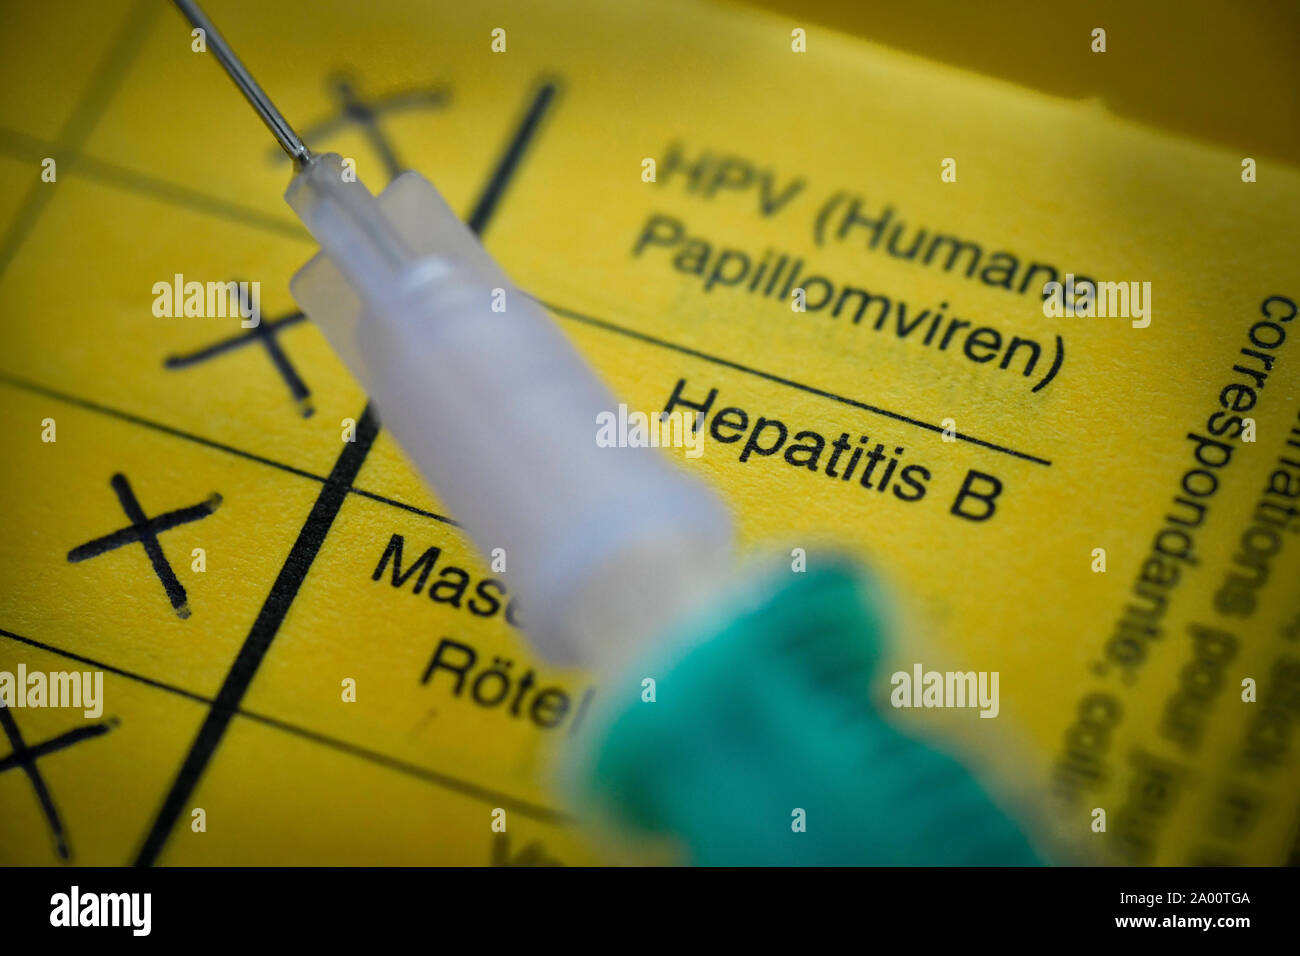 Hepatitis-B-Impfung, Impfbuch, Symbolfoto Stockfoto